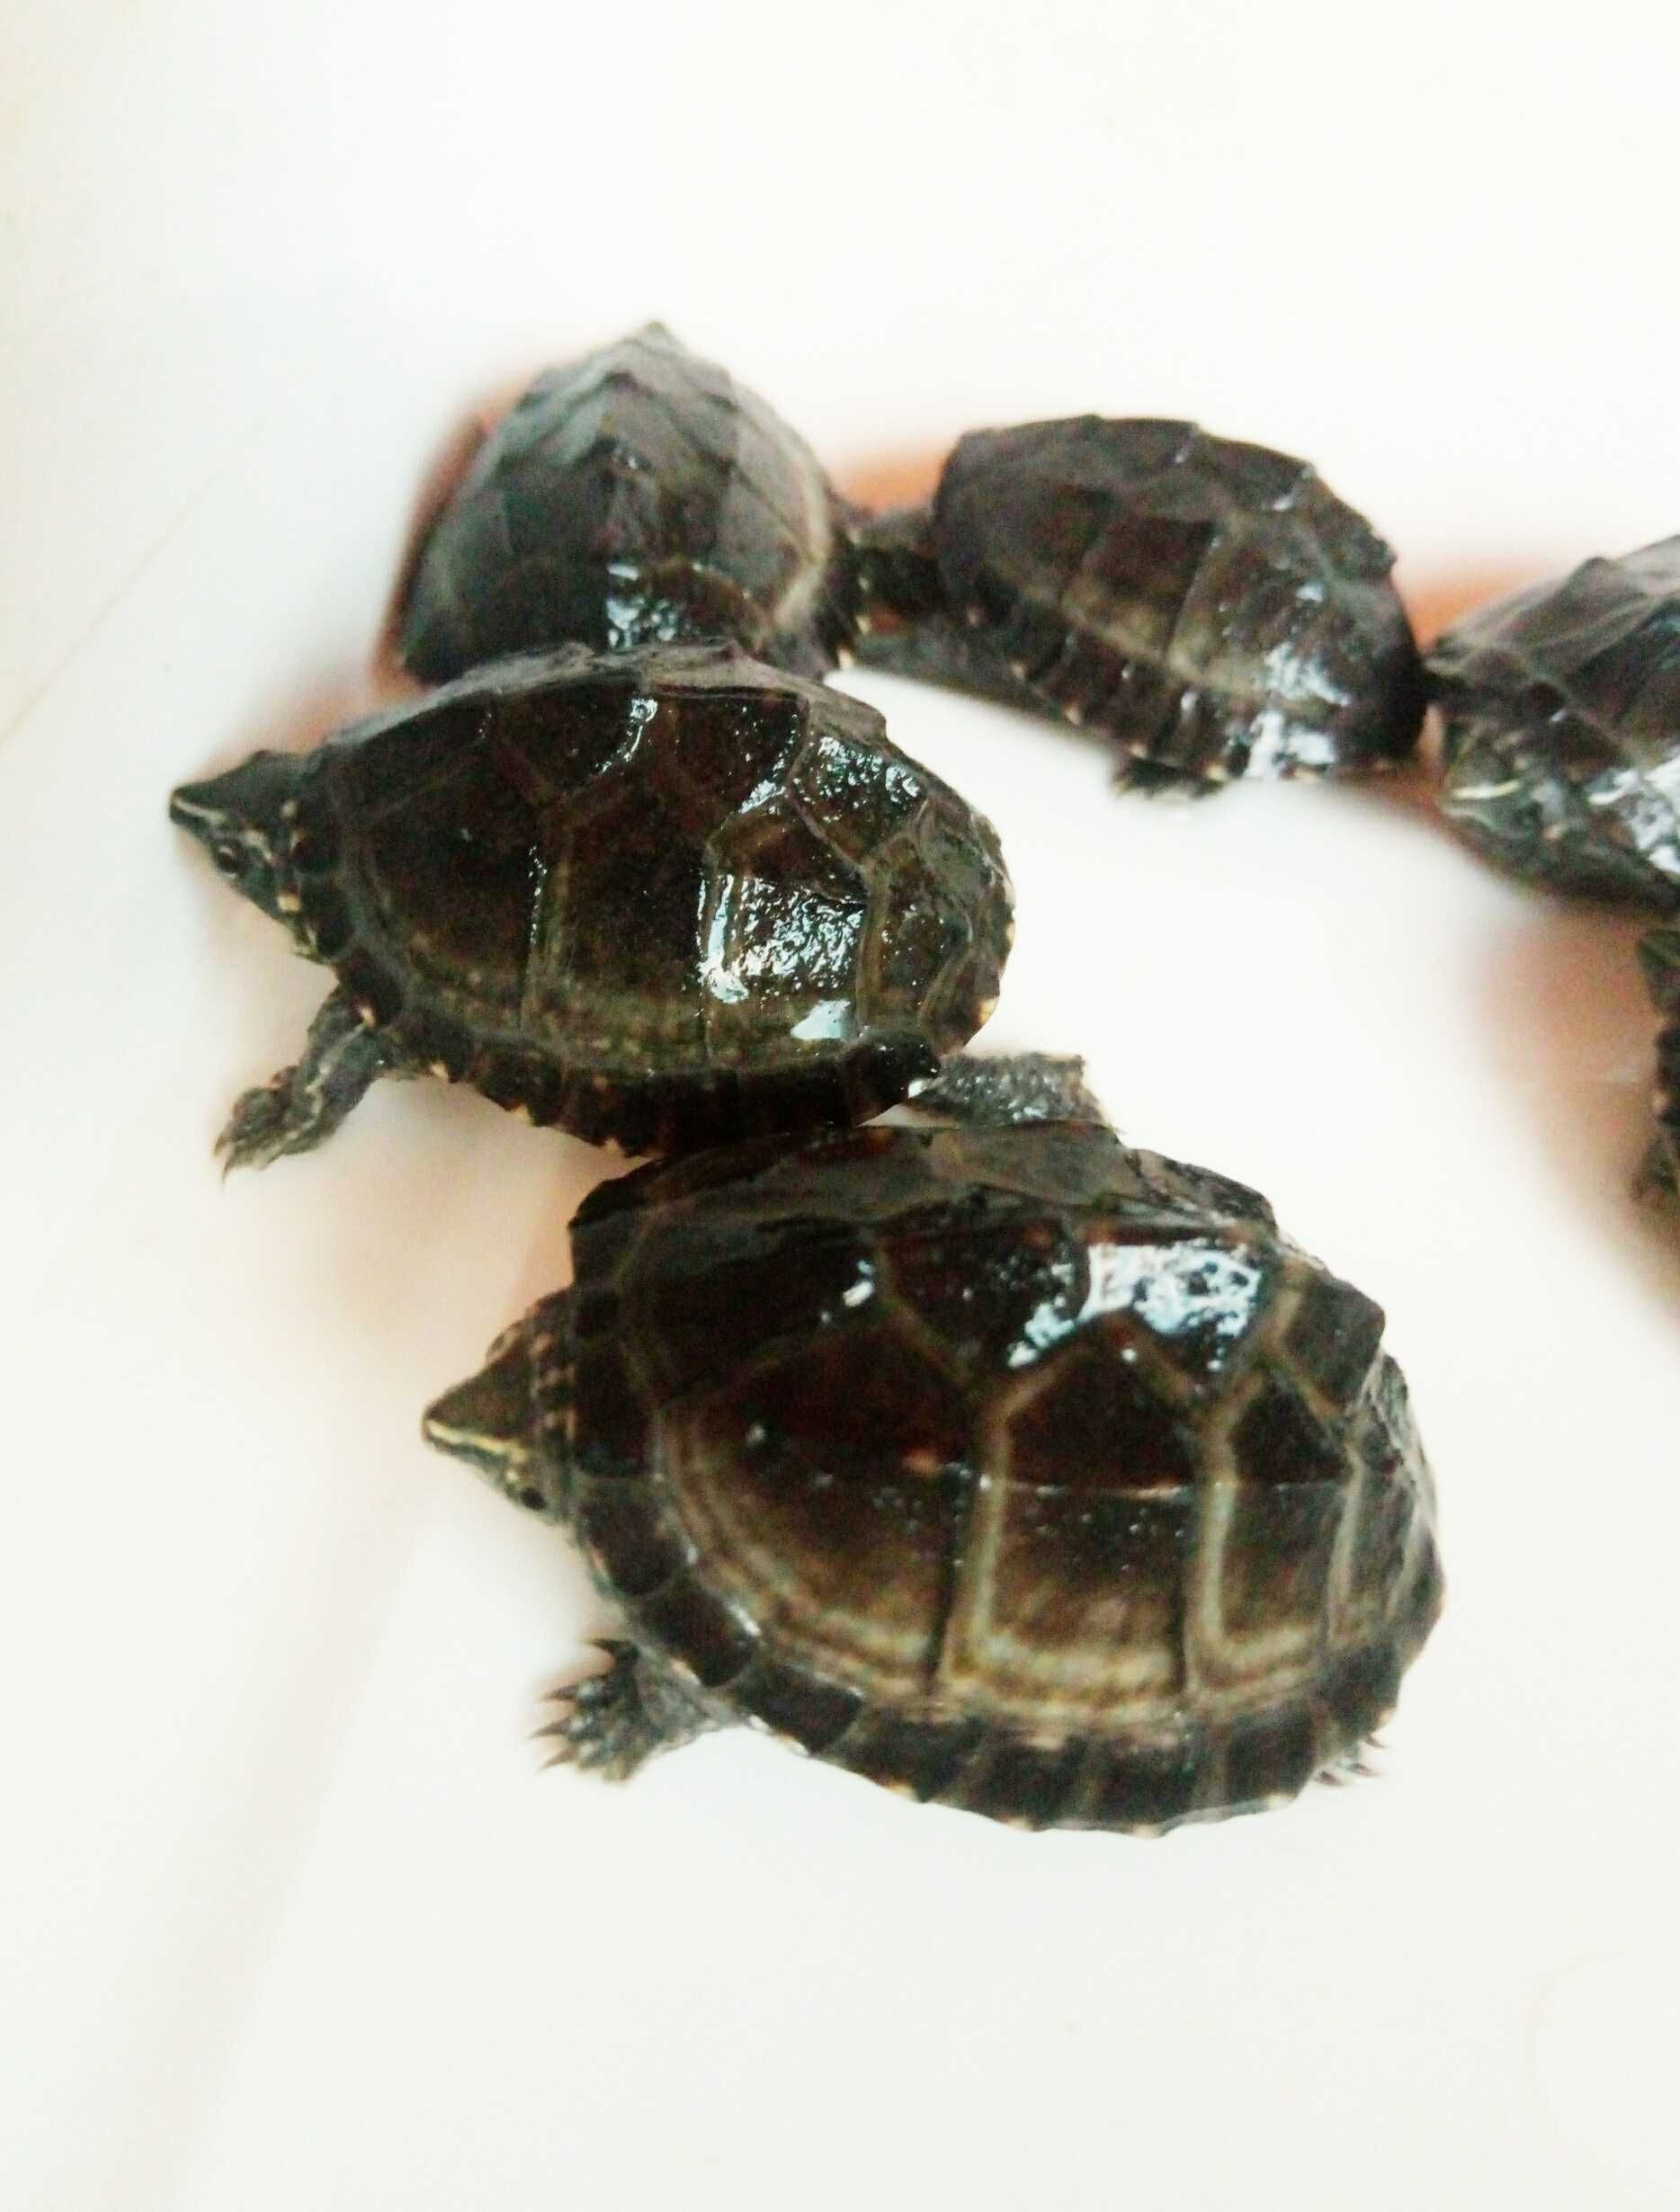 Черепахи рiзних видiв воднi, водно- сухопутнi